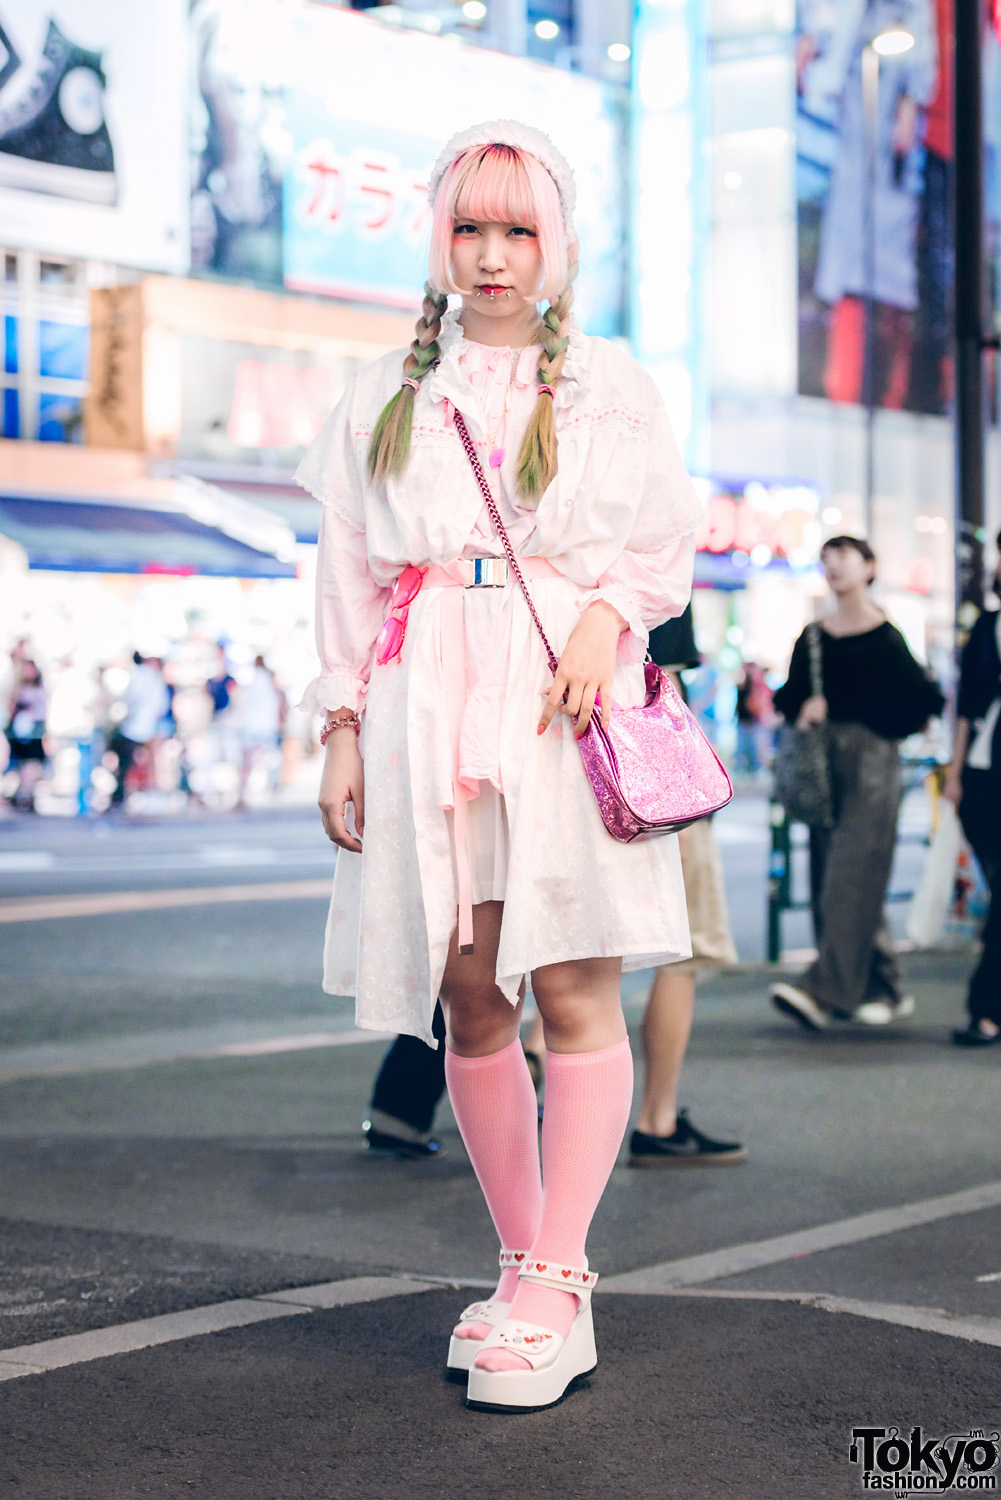 Harajuku Girl In Cute Pink Fashion Style W Kinji Spinns And Disney Glitter Bag